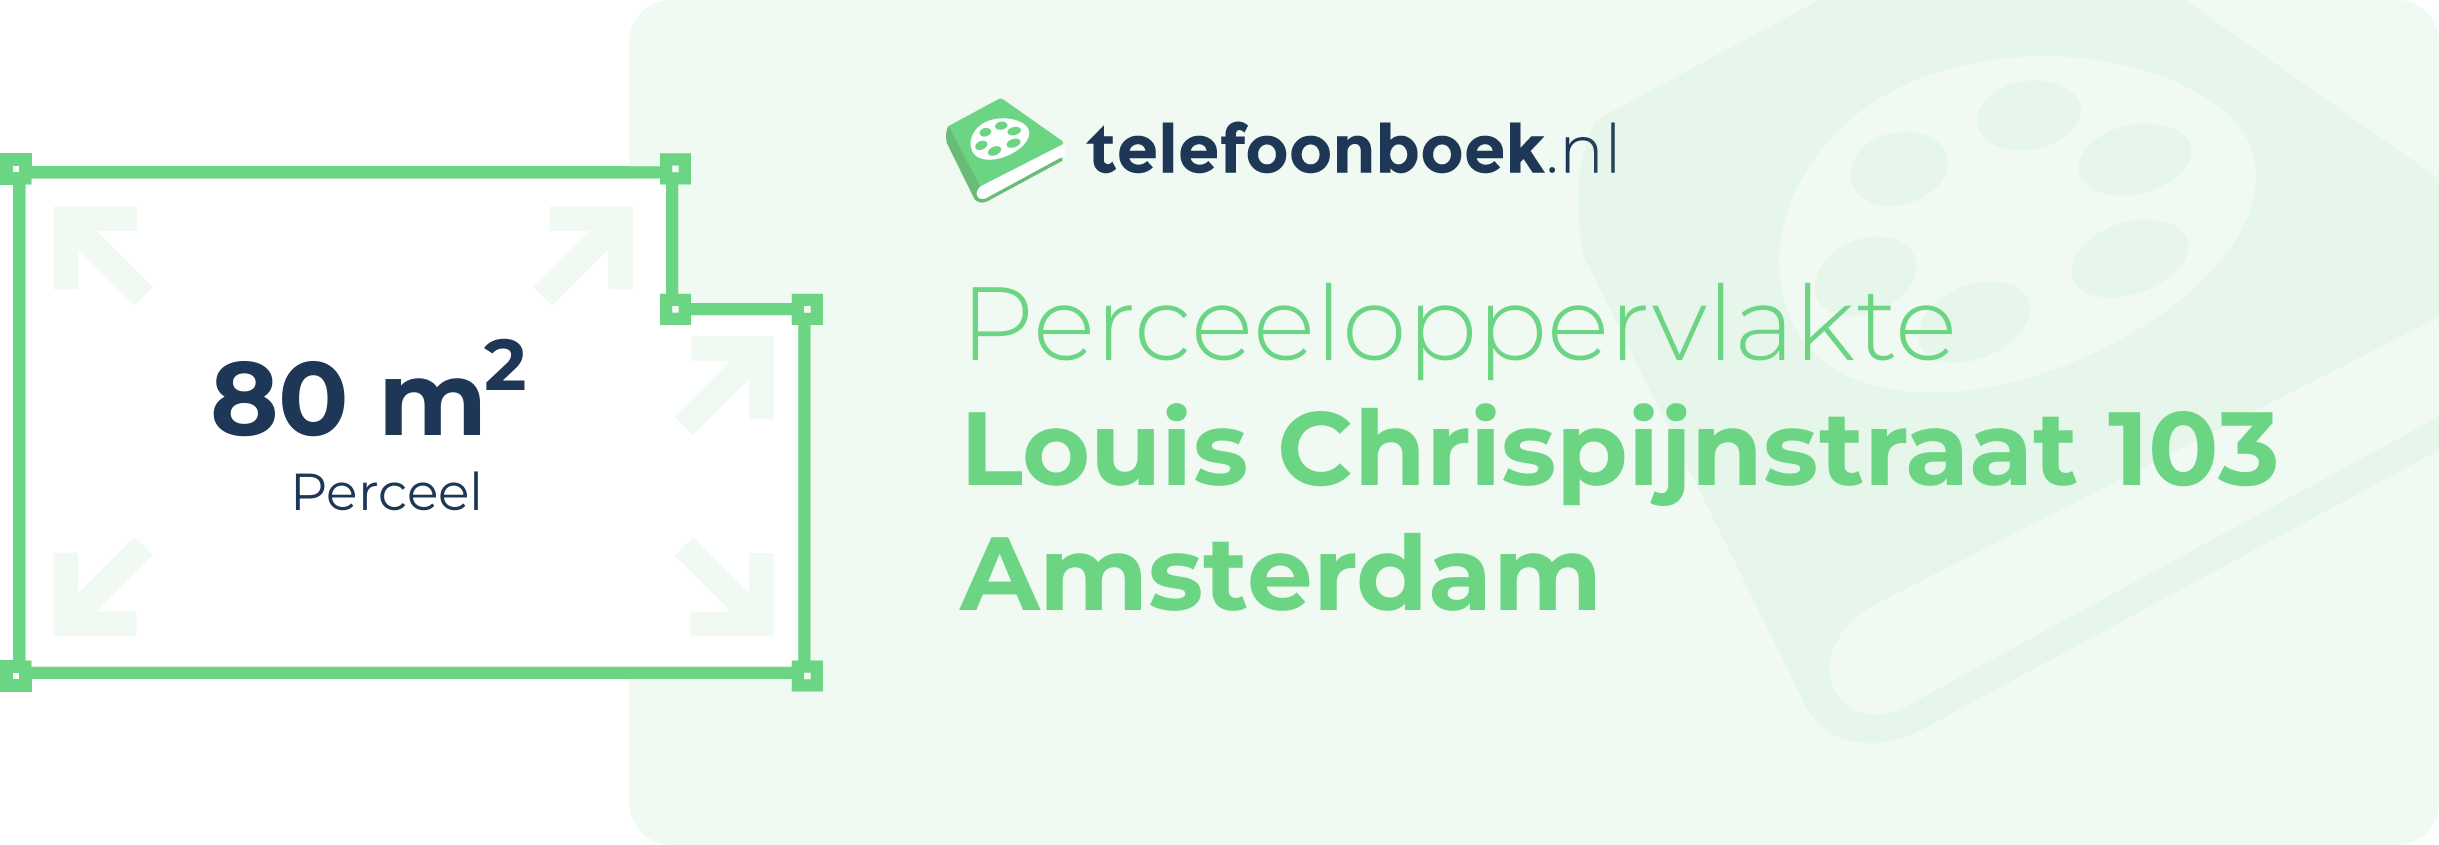 Perceeloppervlakte Louis Chrispijnstraat 103 Amsterdam